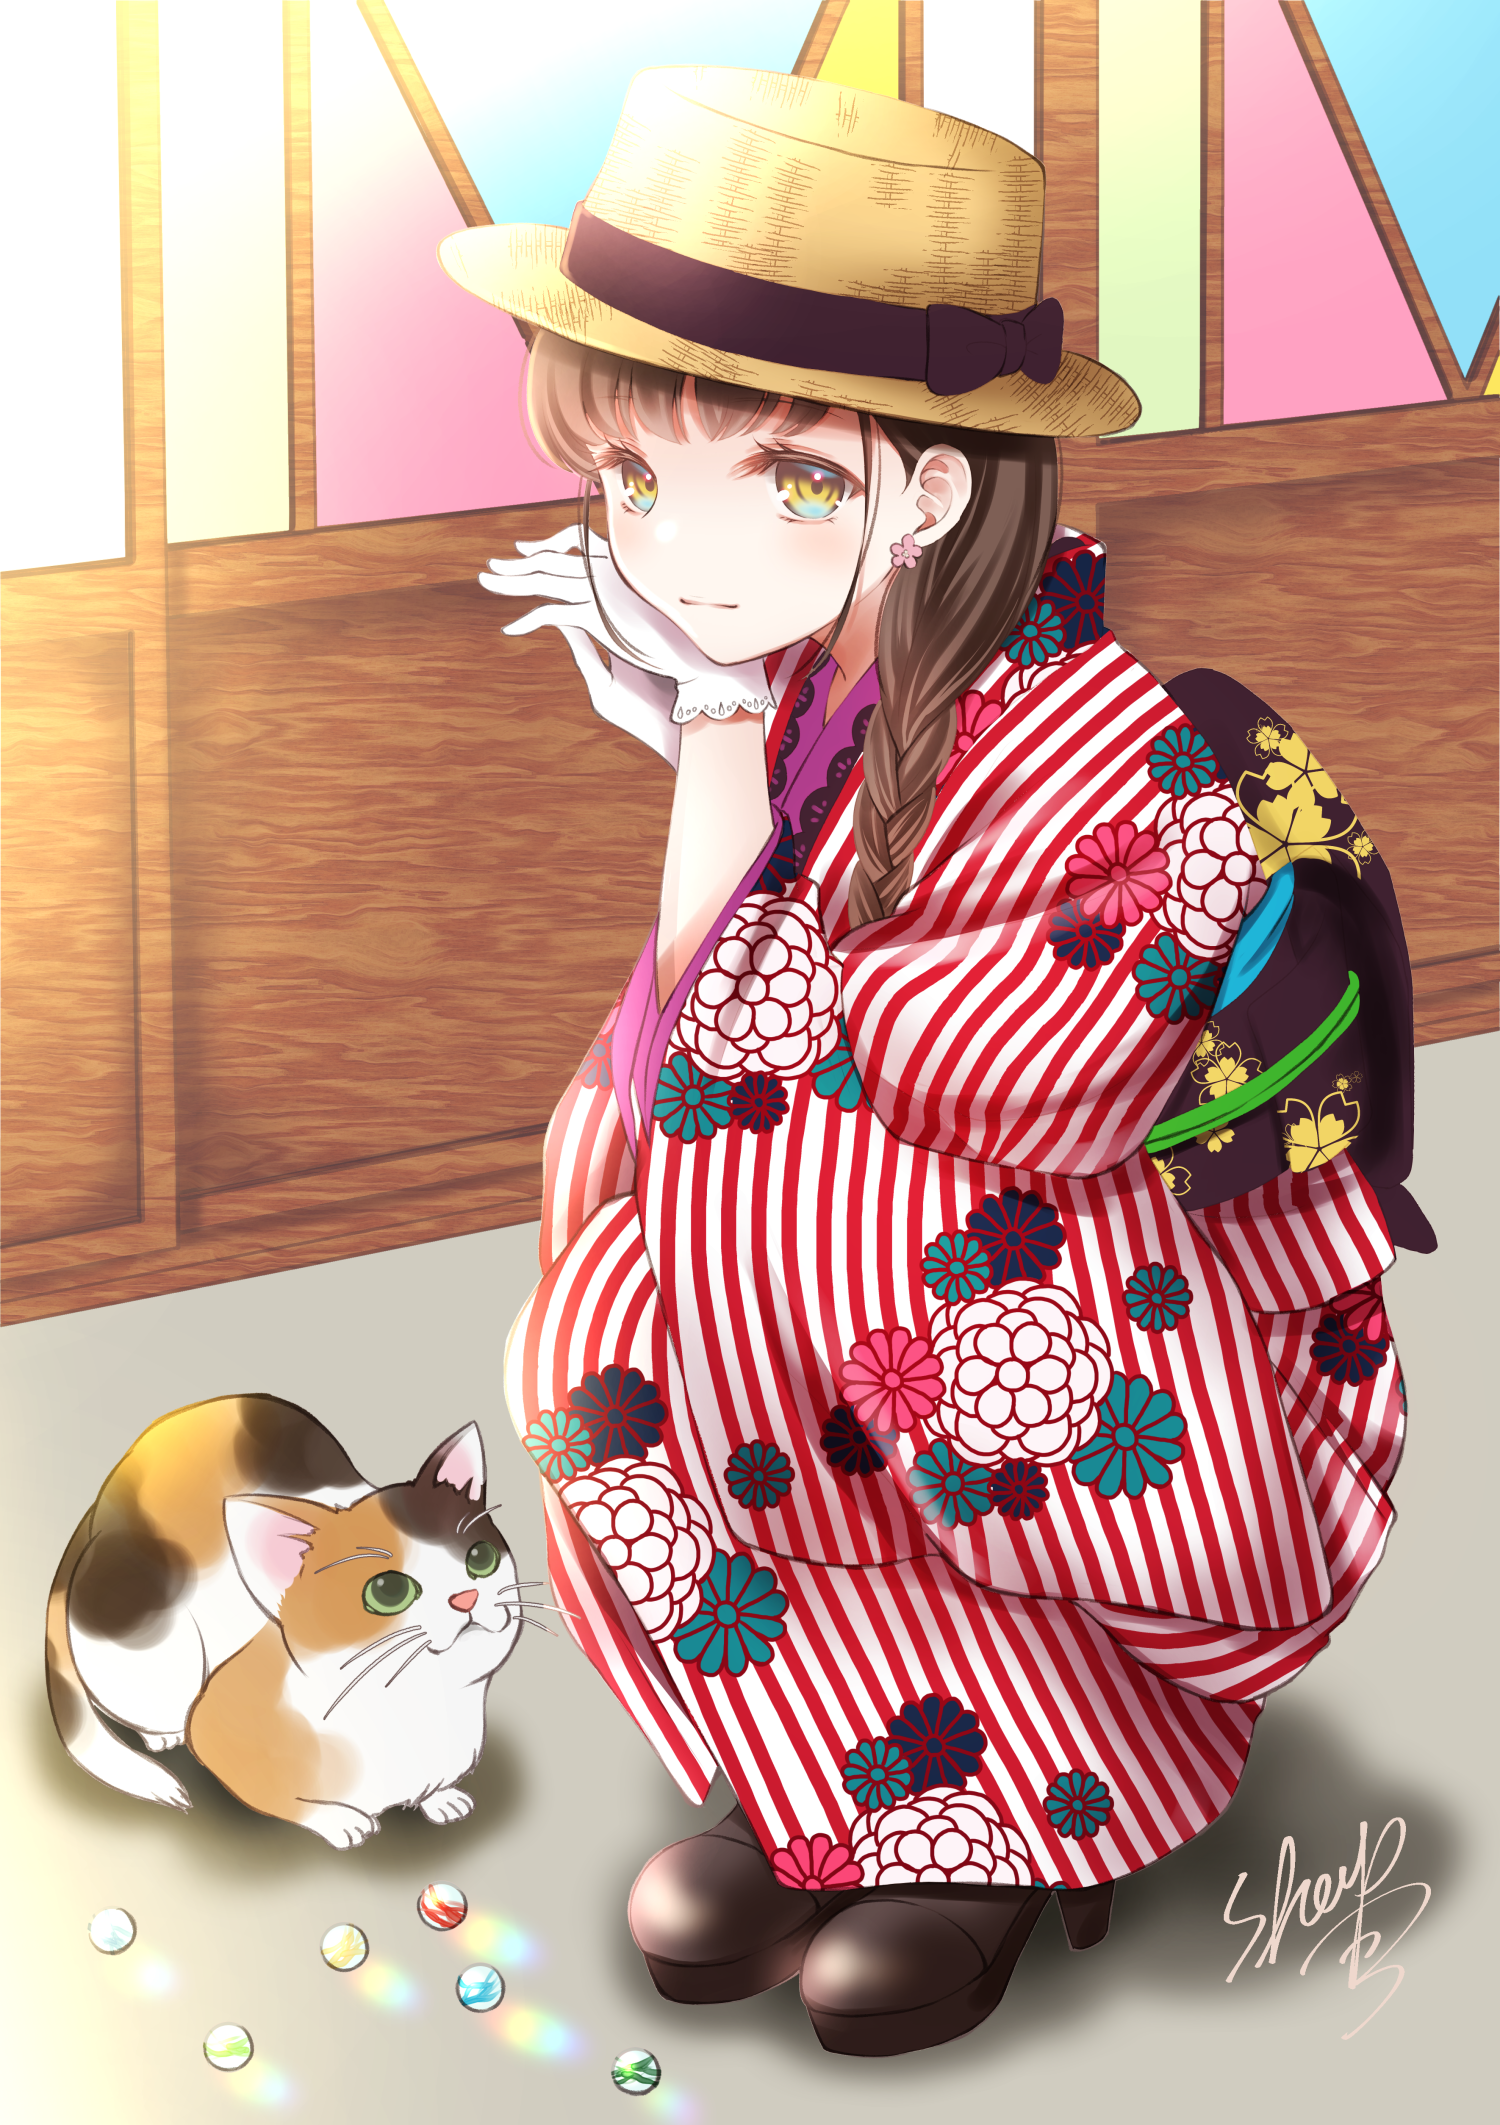 Anime 1500x2125 anime anime girls digital art artwork 2D portrait display Japanese clothes kimono hat cats Sheepd